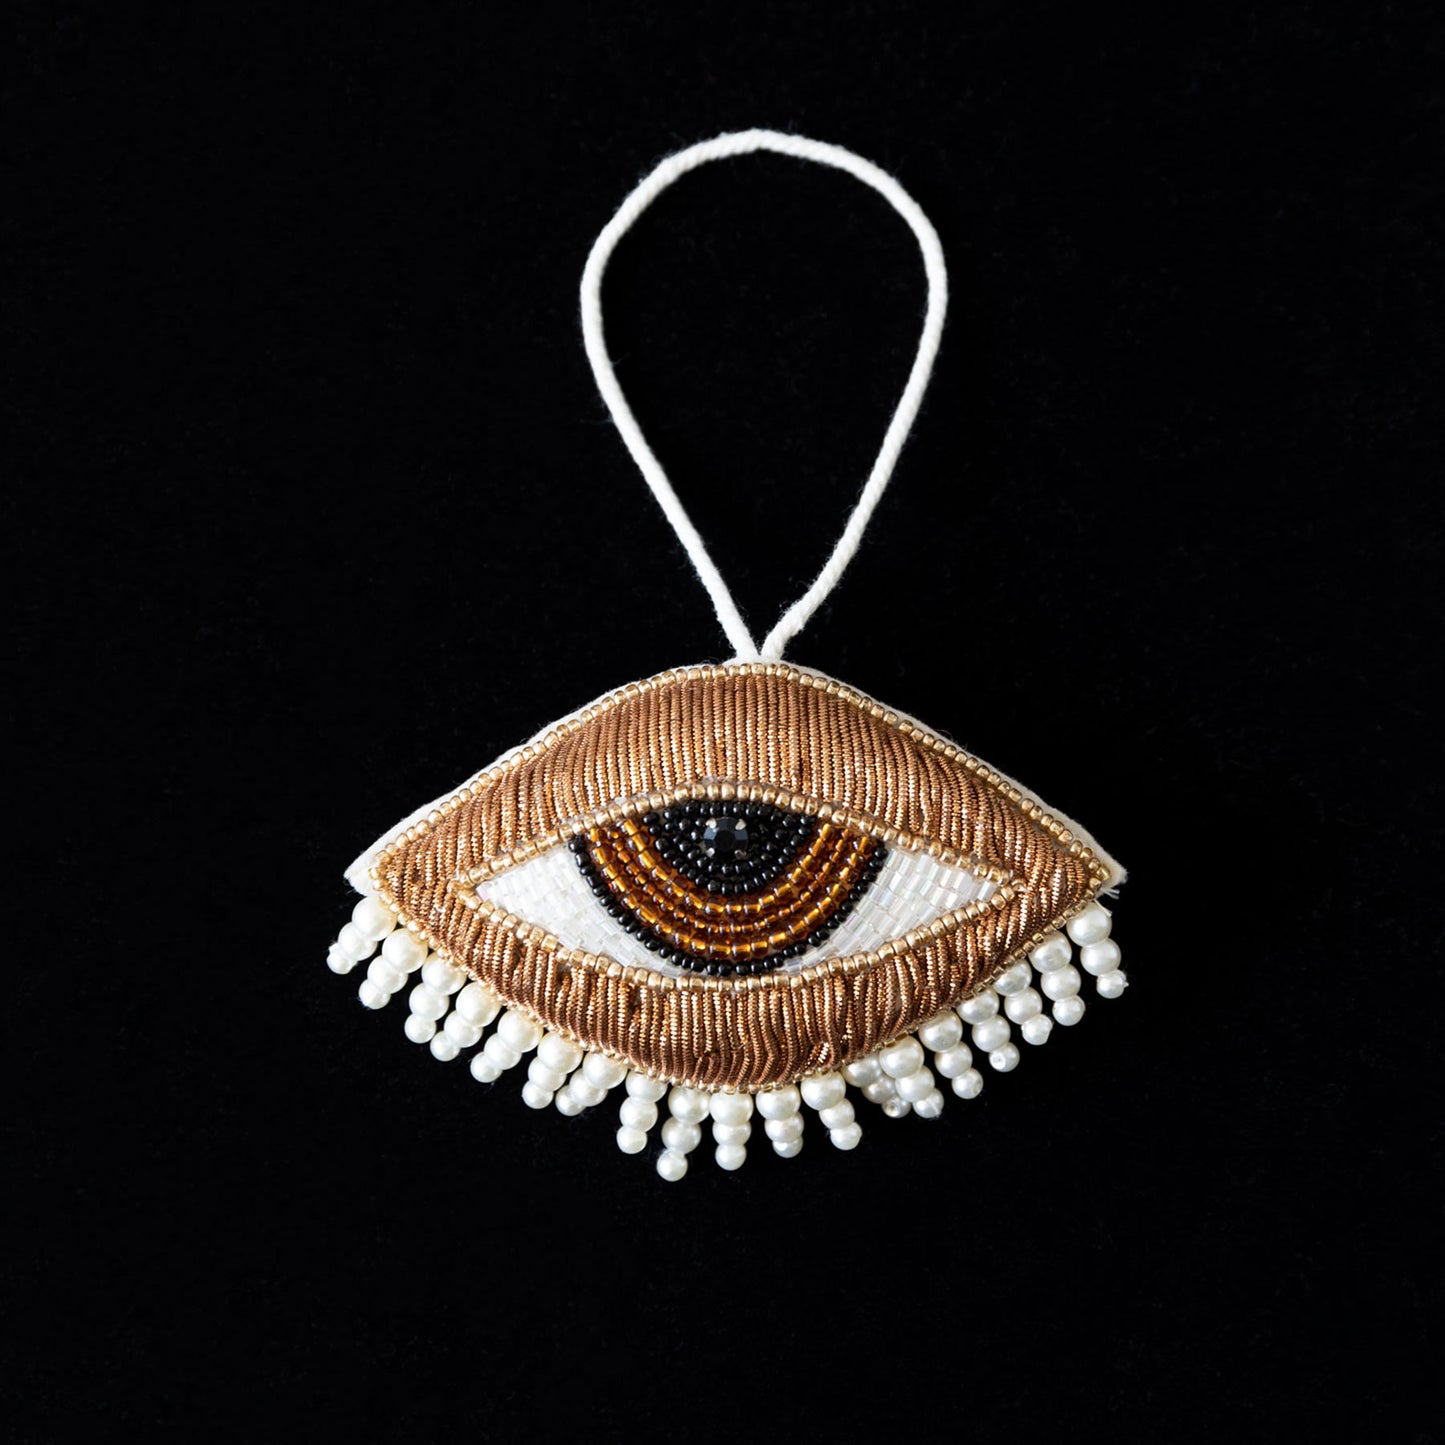 Golden Eye Ornament